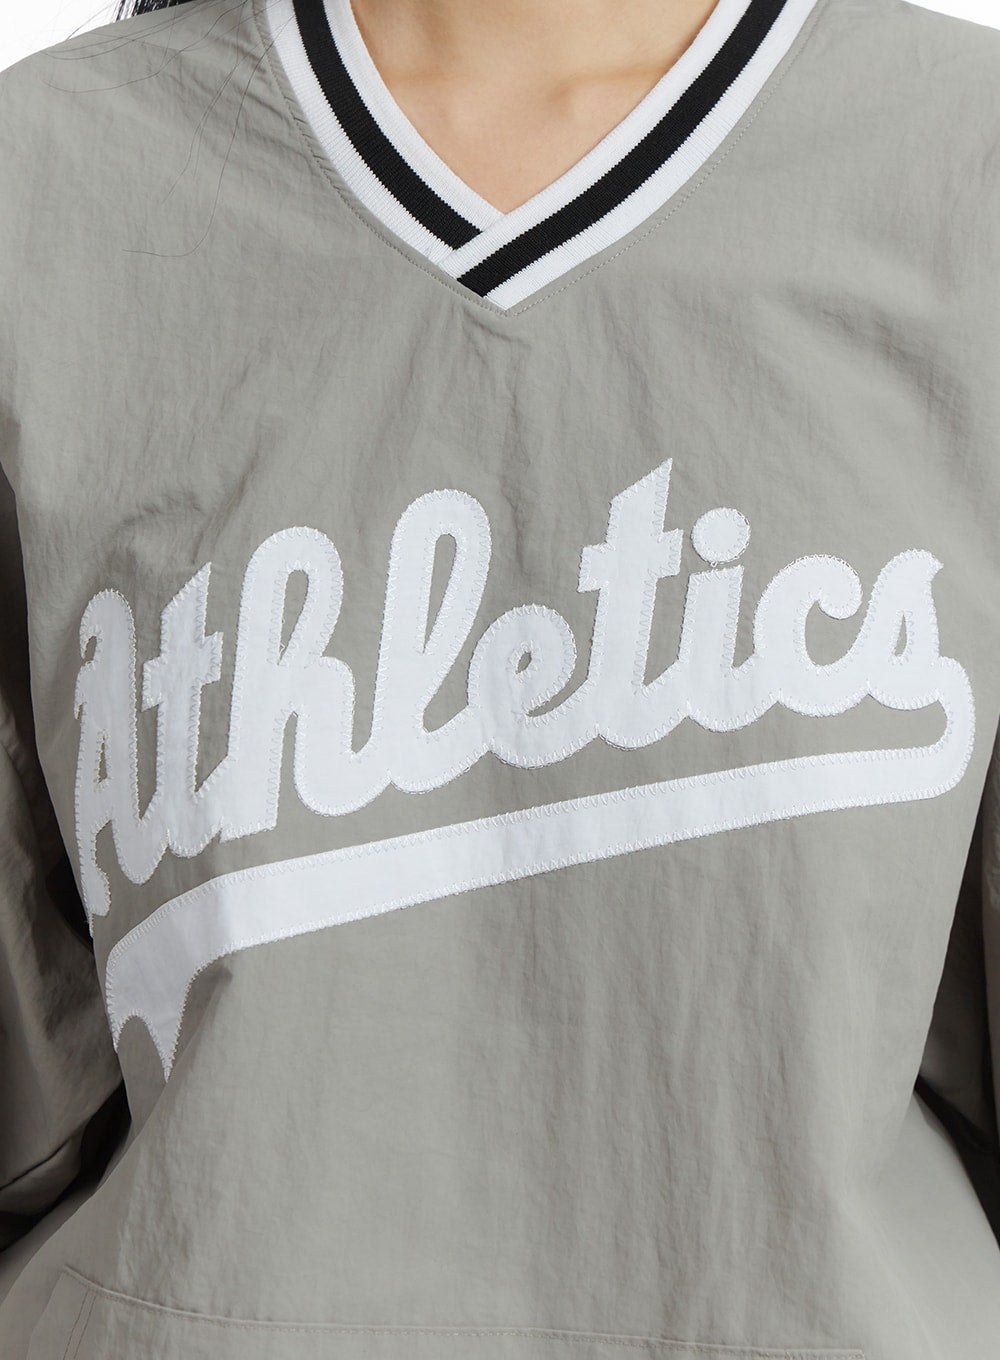 athletics-v-neck-oversized-sweatshirt-im406